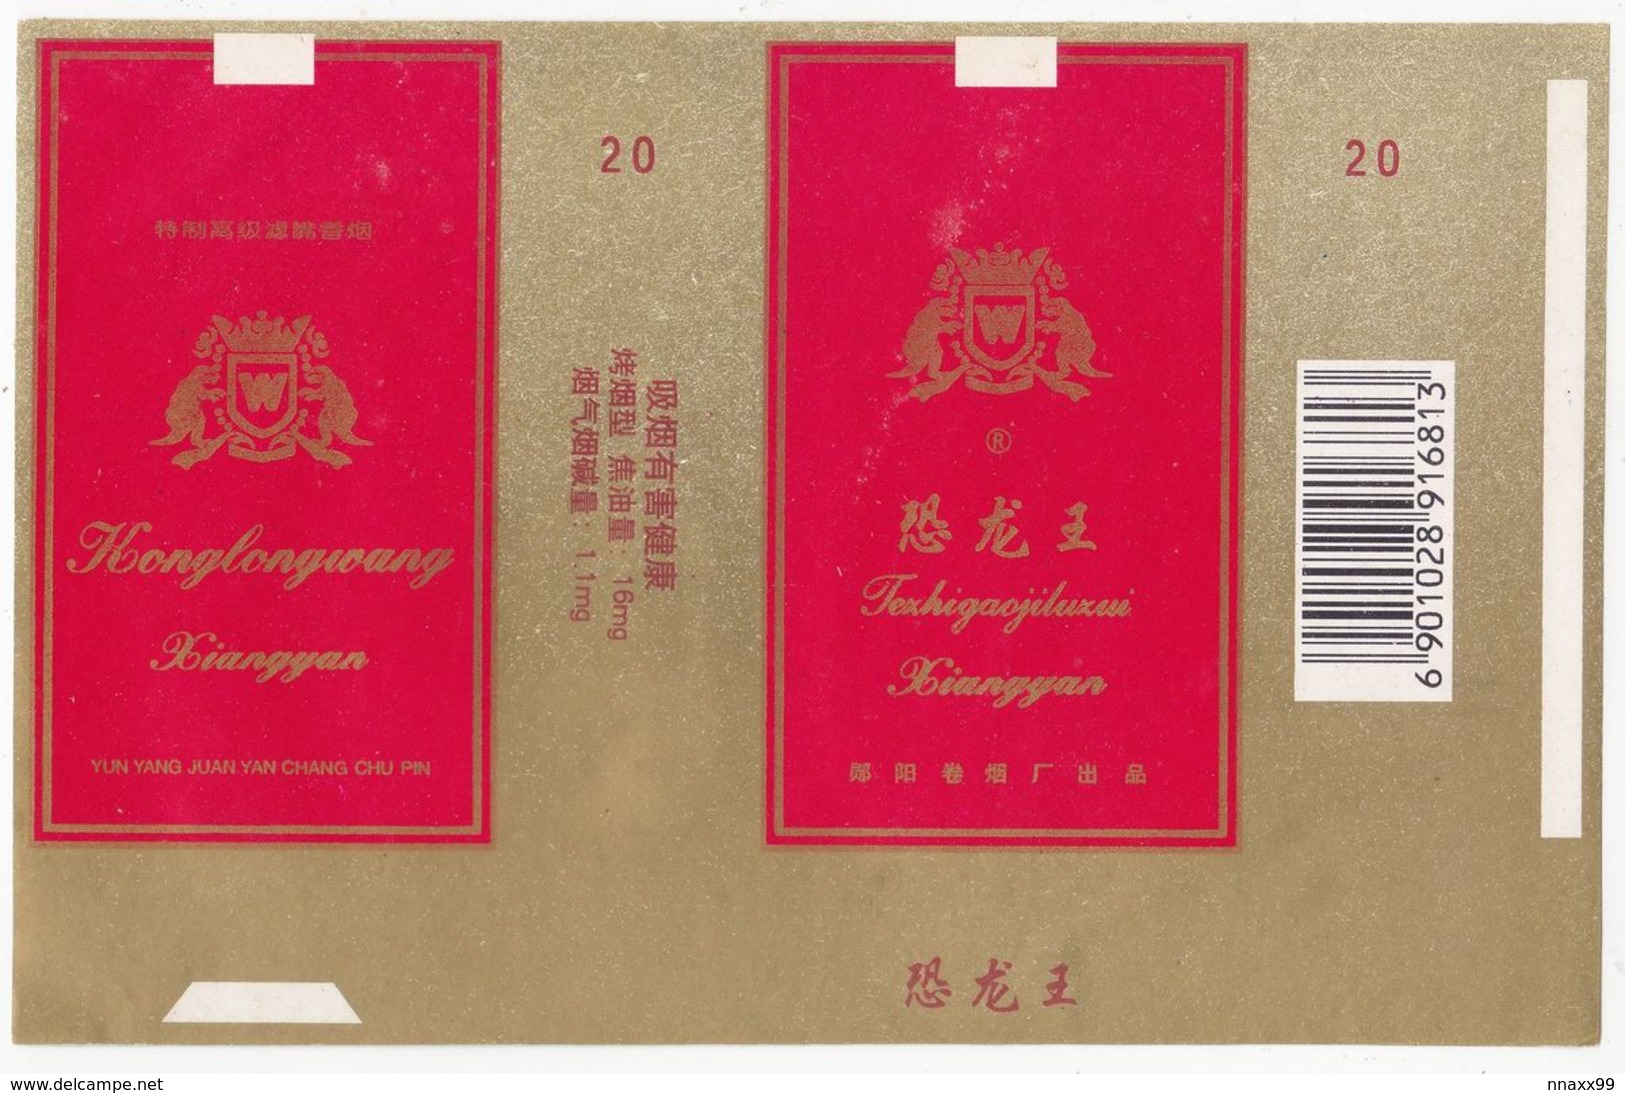 Dinosaur - Theropoda, KONGLONGWANG Cigarette Box, Soft, Gold & Red, Yunyang Cigarette Factory, Hubei, China - Empty Cigarettes Boxes